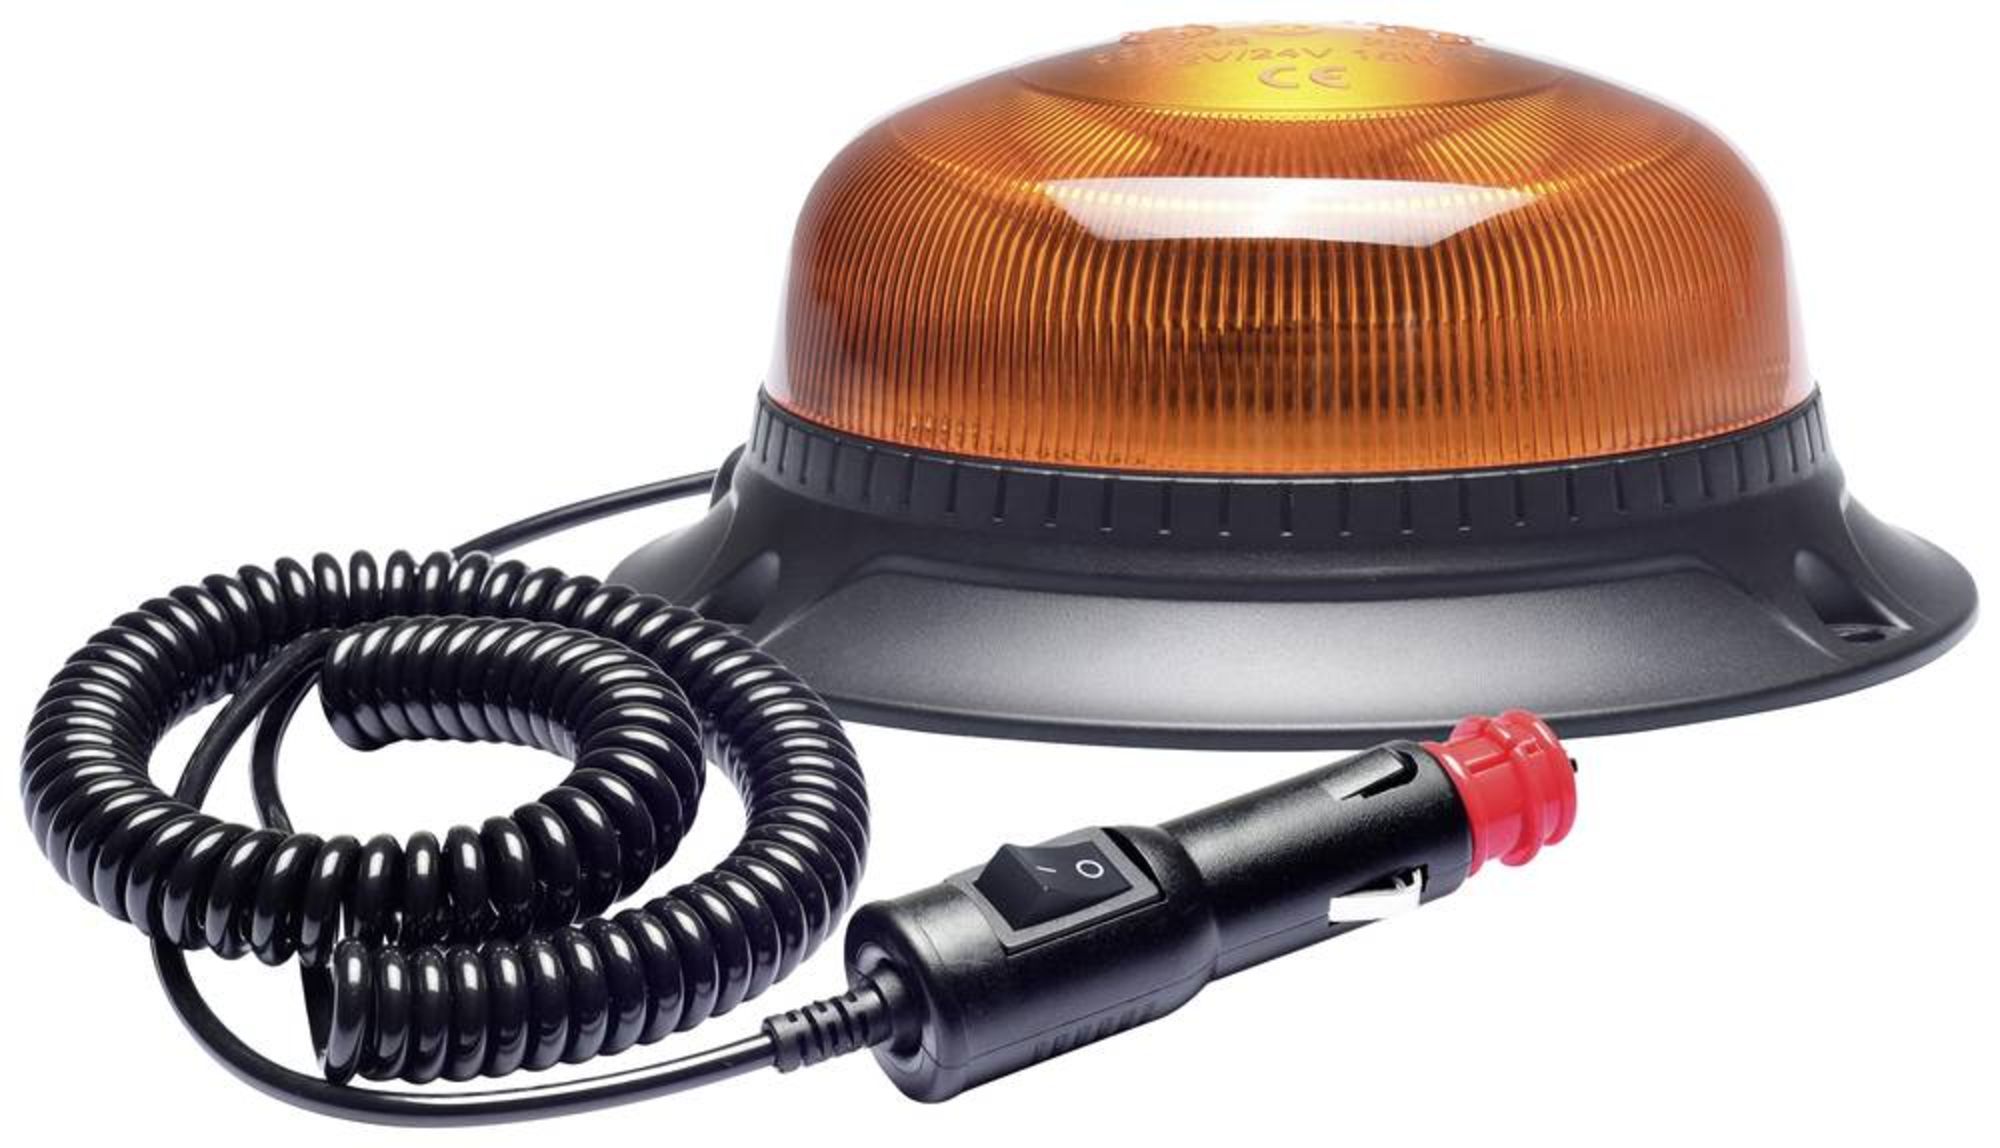 Berger & Schröter Rundumleuchte LED Mini RKL Magnet 20302 12 V/DC, 24 V/DC  Magnetfuß, Schraubmontage Orange online bestellen